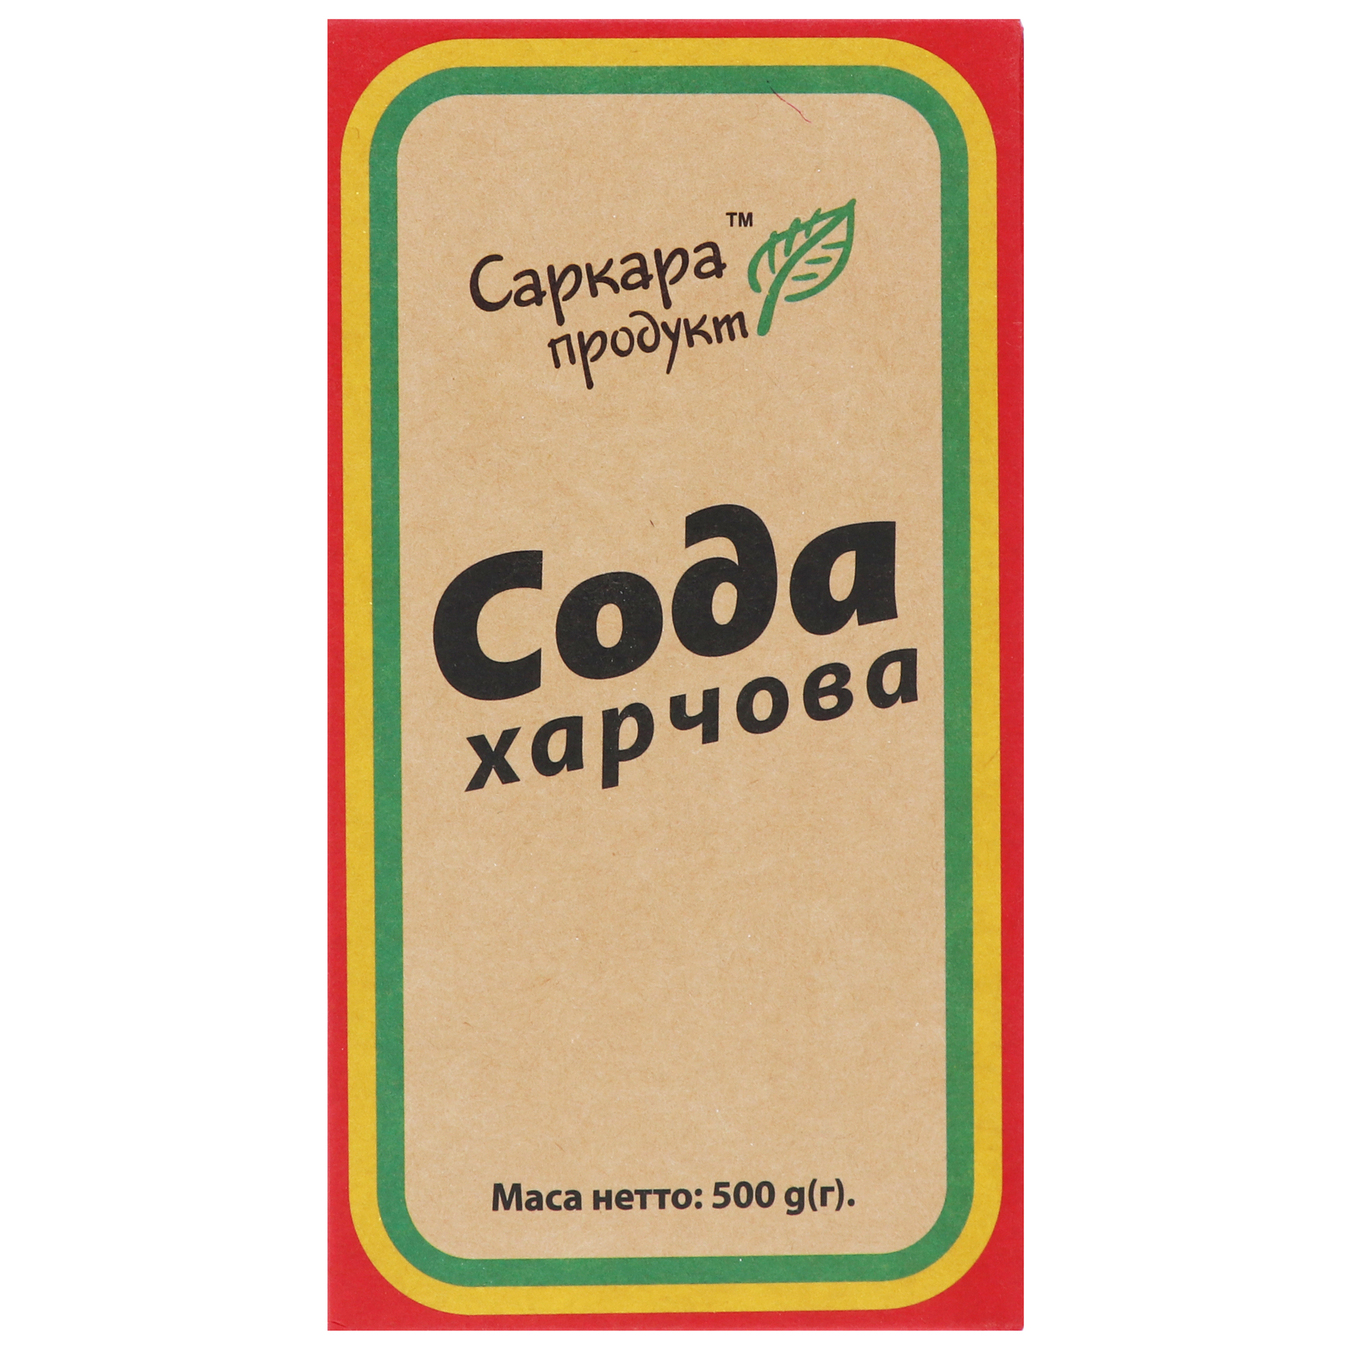 Sarkara Product  Soda  product 500g